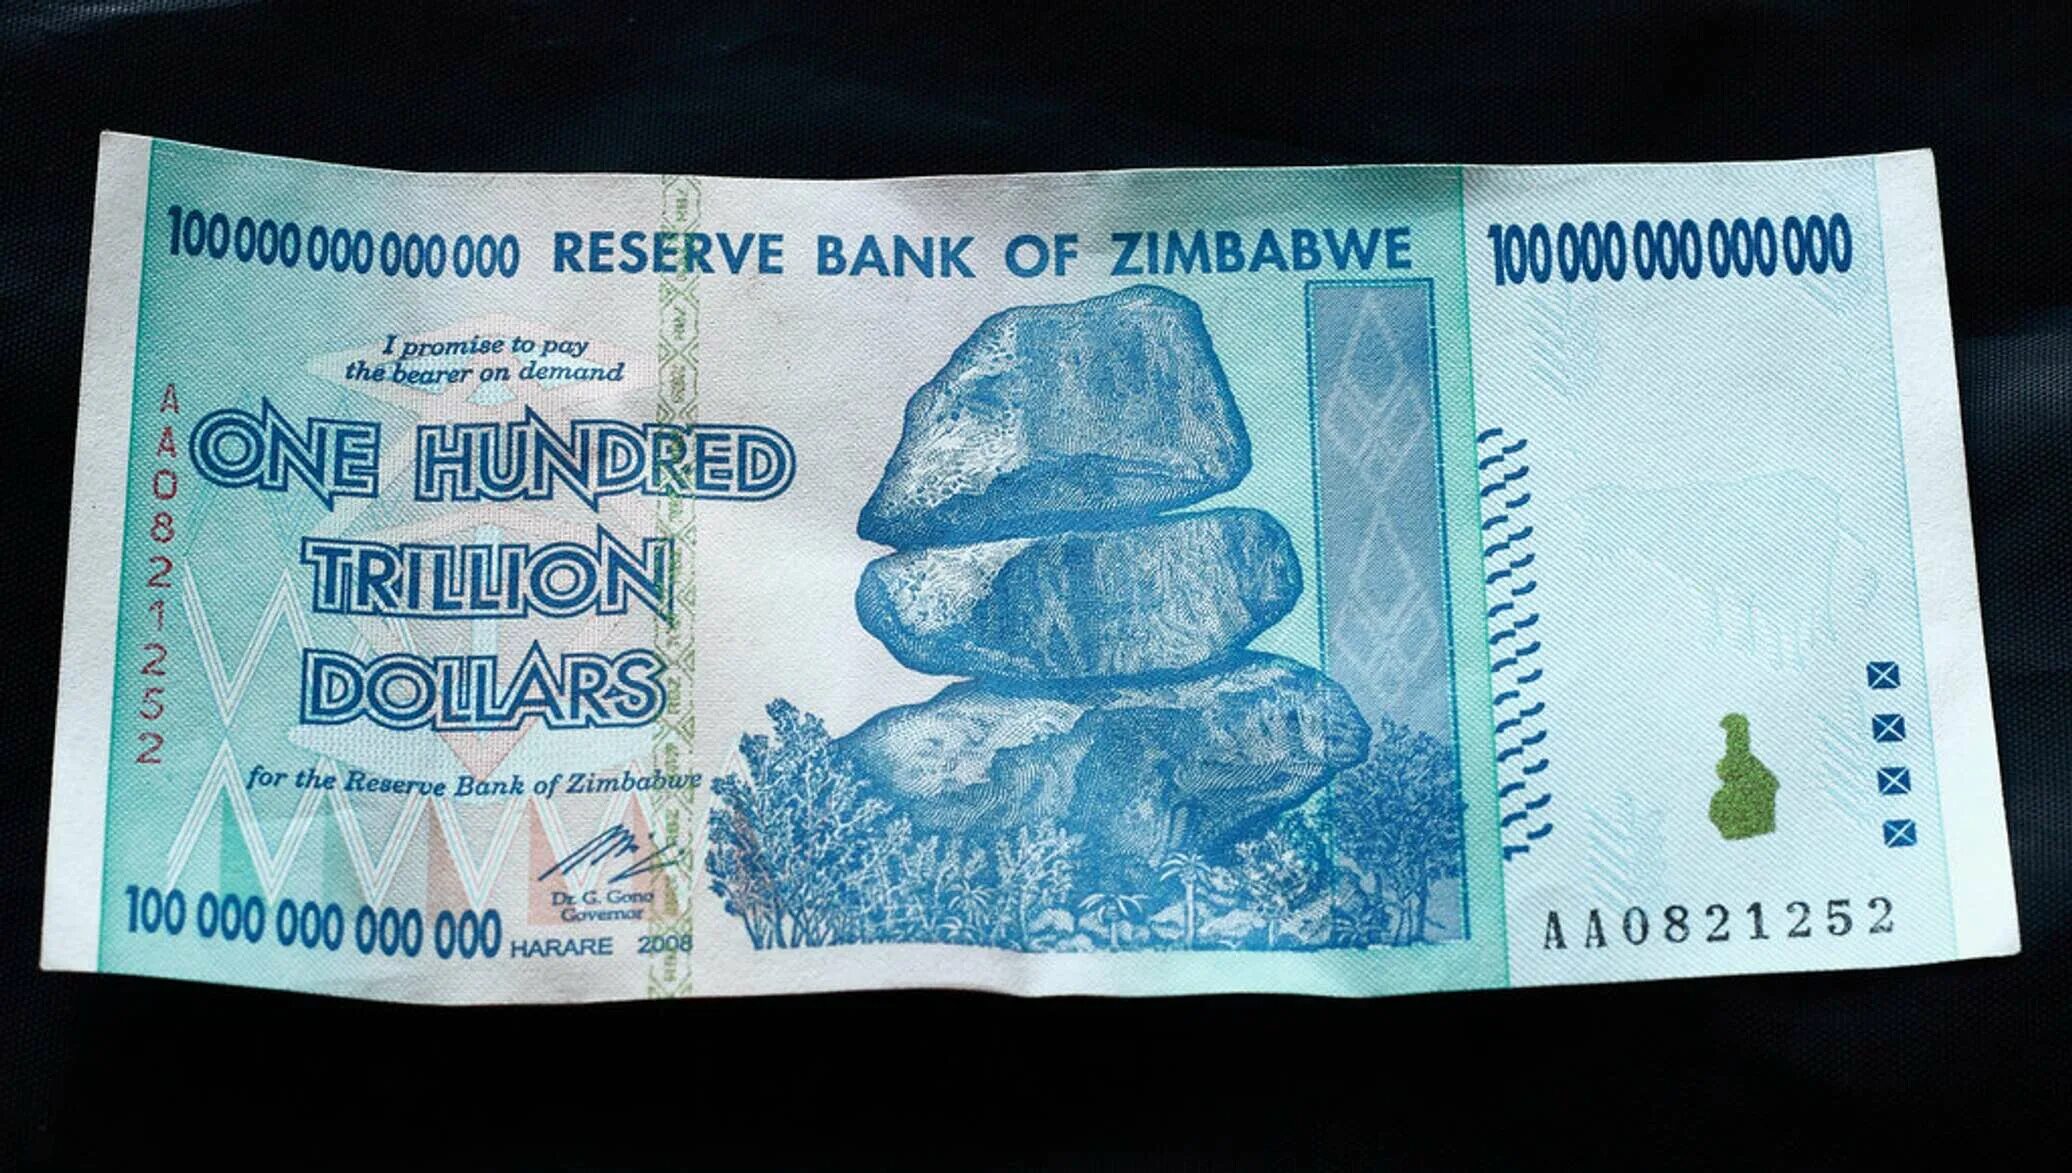 Банкноты Зимбабве 100 триллионов. Зимбабве купюра 100 триллионов. Банкнота 100 триллионов долларов Зимбабве. Купюра Зимбабве СТО триллионов долларов.